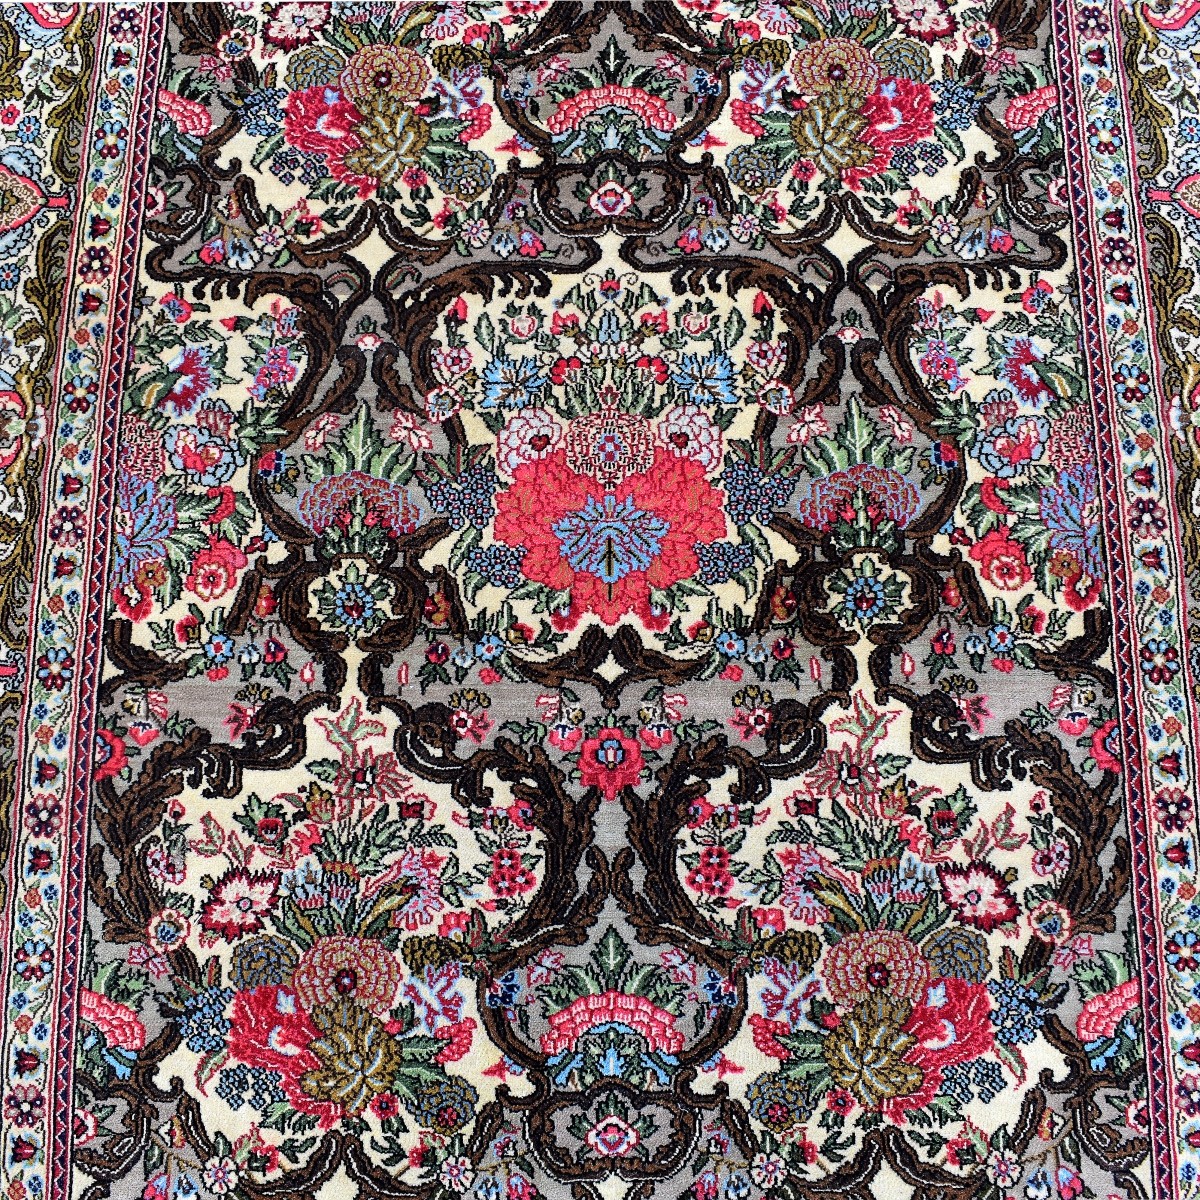 Semi Antique Persian Silk and Wool Rug